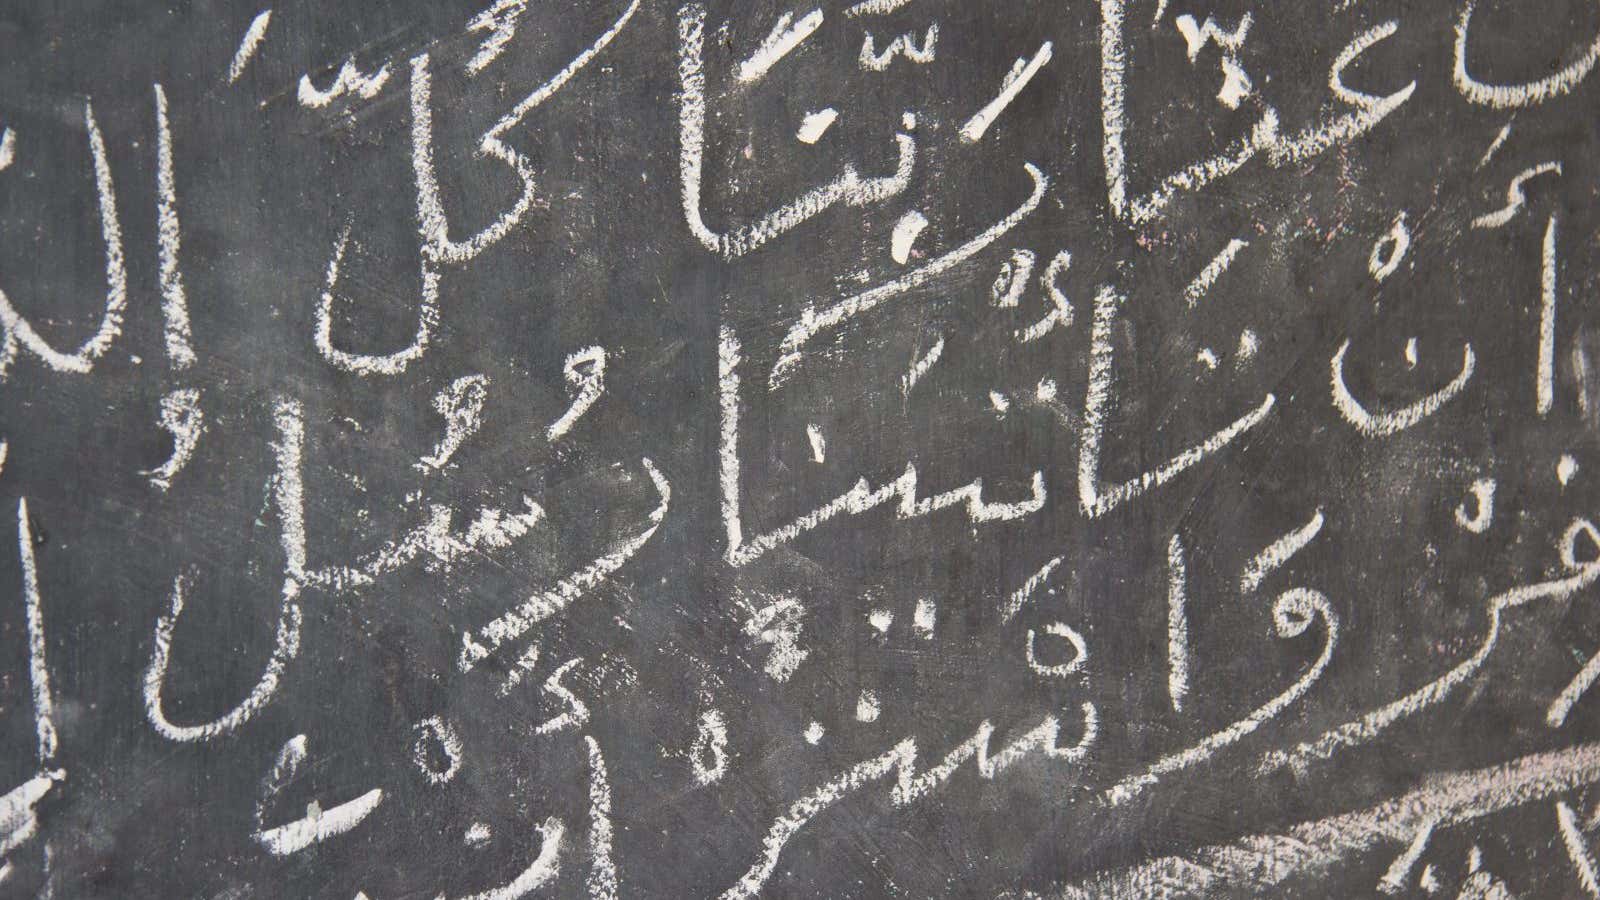 Arabic script strikes fear in the heart of some.